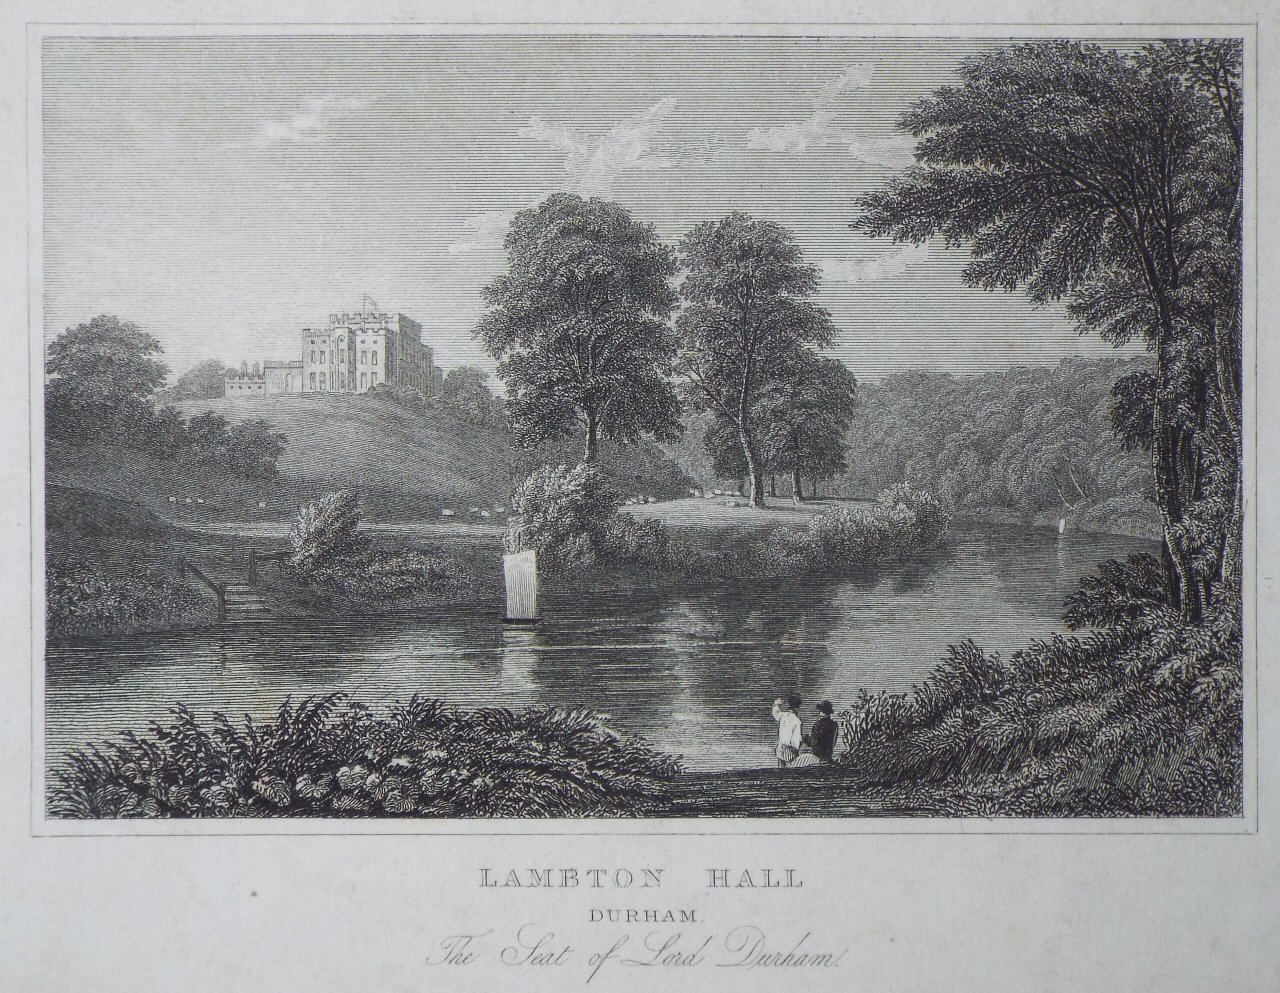 Print - Lambton Hall Durham. The Seat of Lord Durham